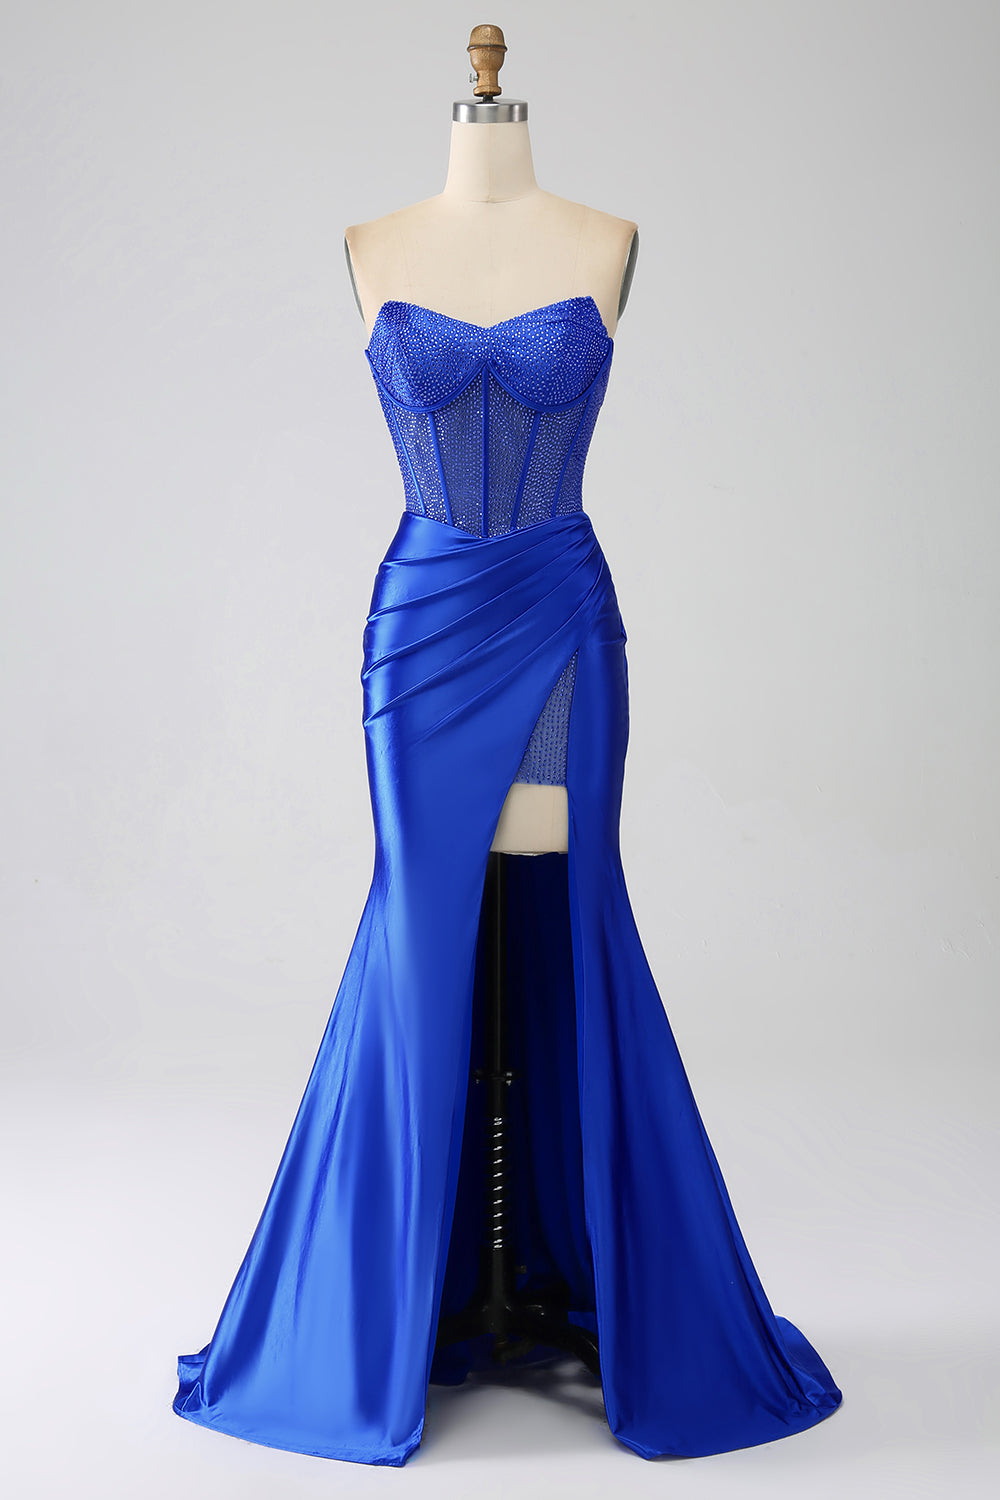 Emiliana Royal Blue Strapless Dress – Elegant Corset Gown with Slit, KissProm